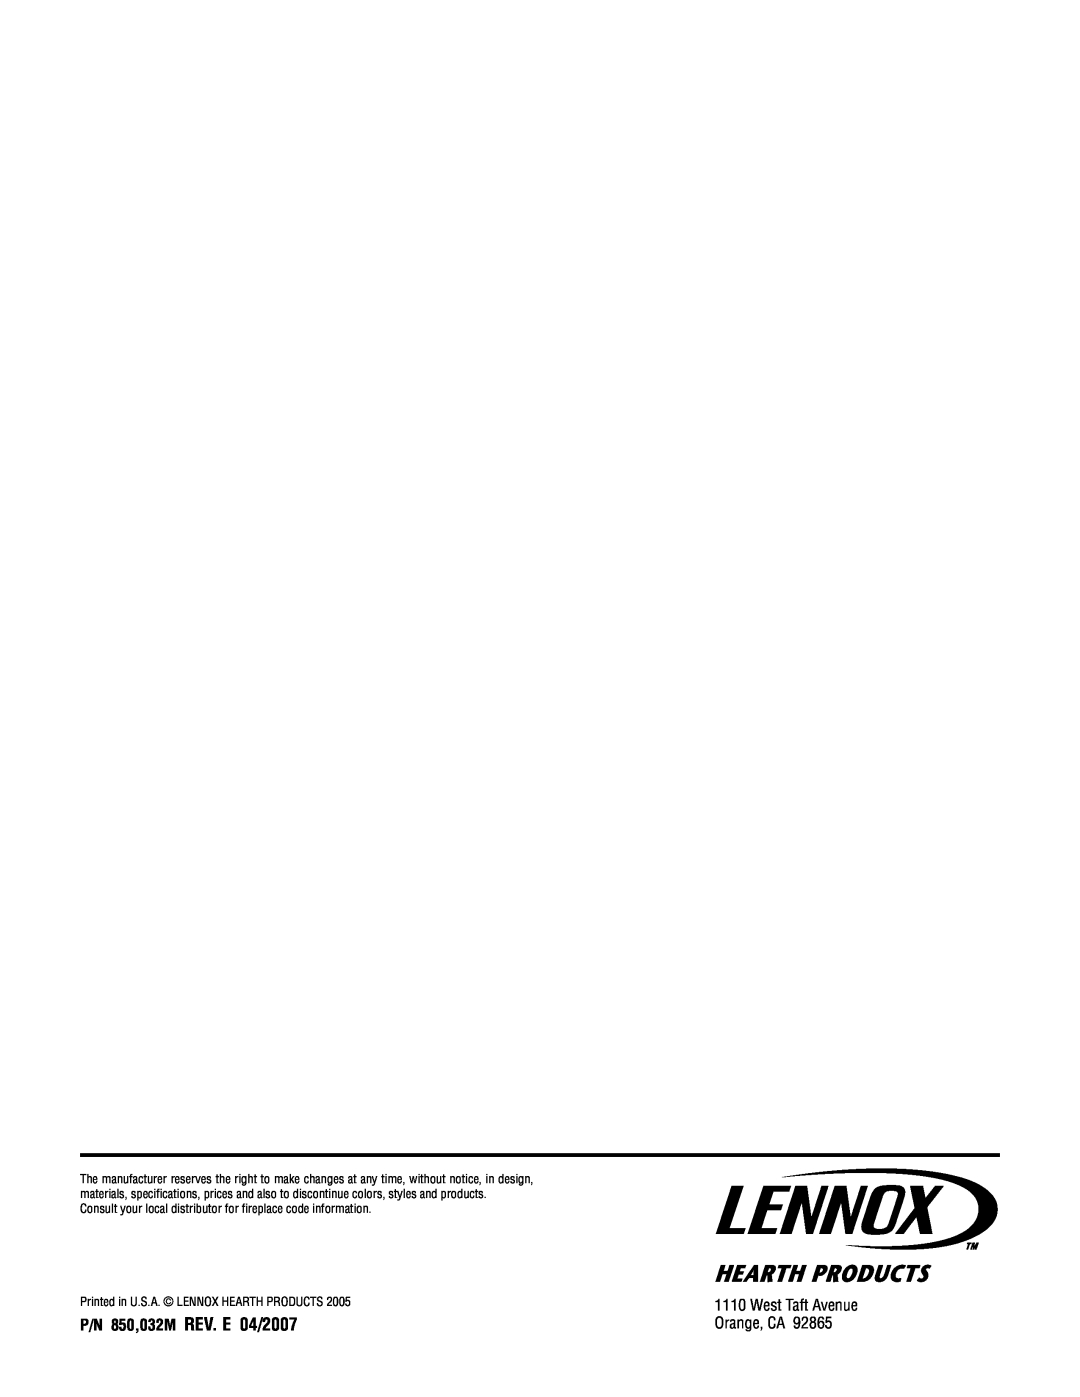 Lucent Technologies MPE-33R warranty P/N 850,032M REV. E 04/2007, West Taft Avenue Orange, CA 